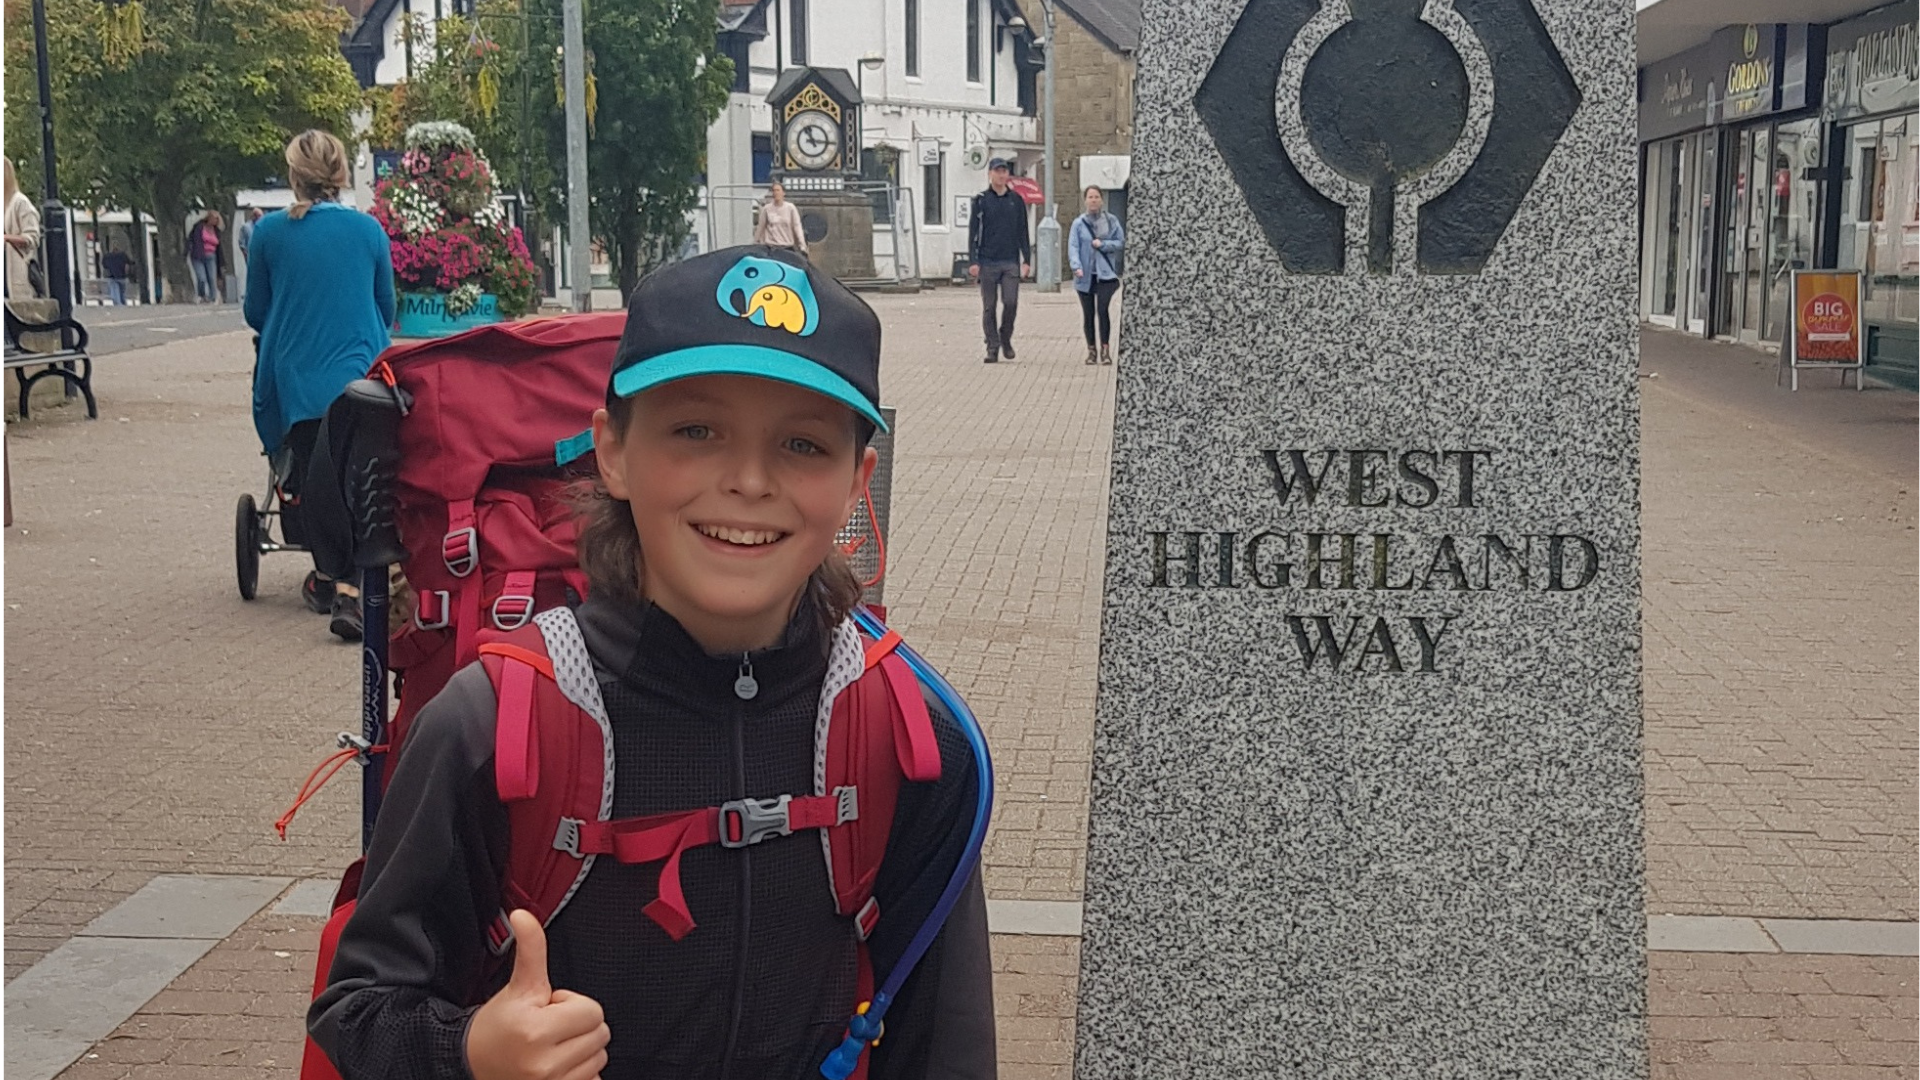 Luke starting the West Highland Way walk